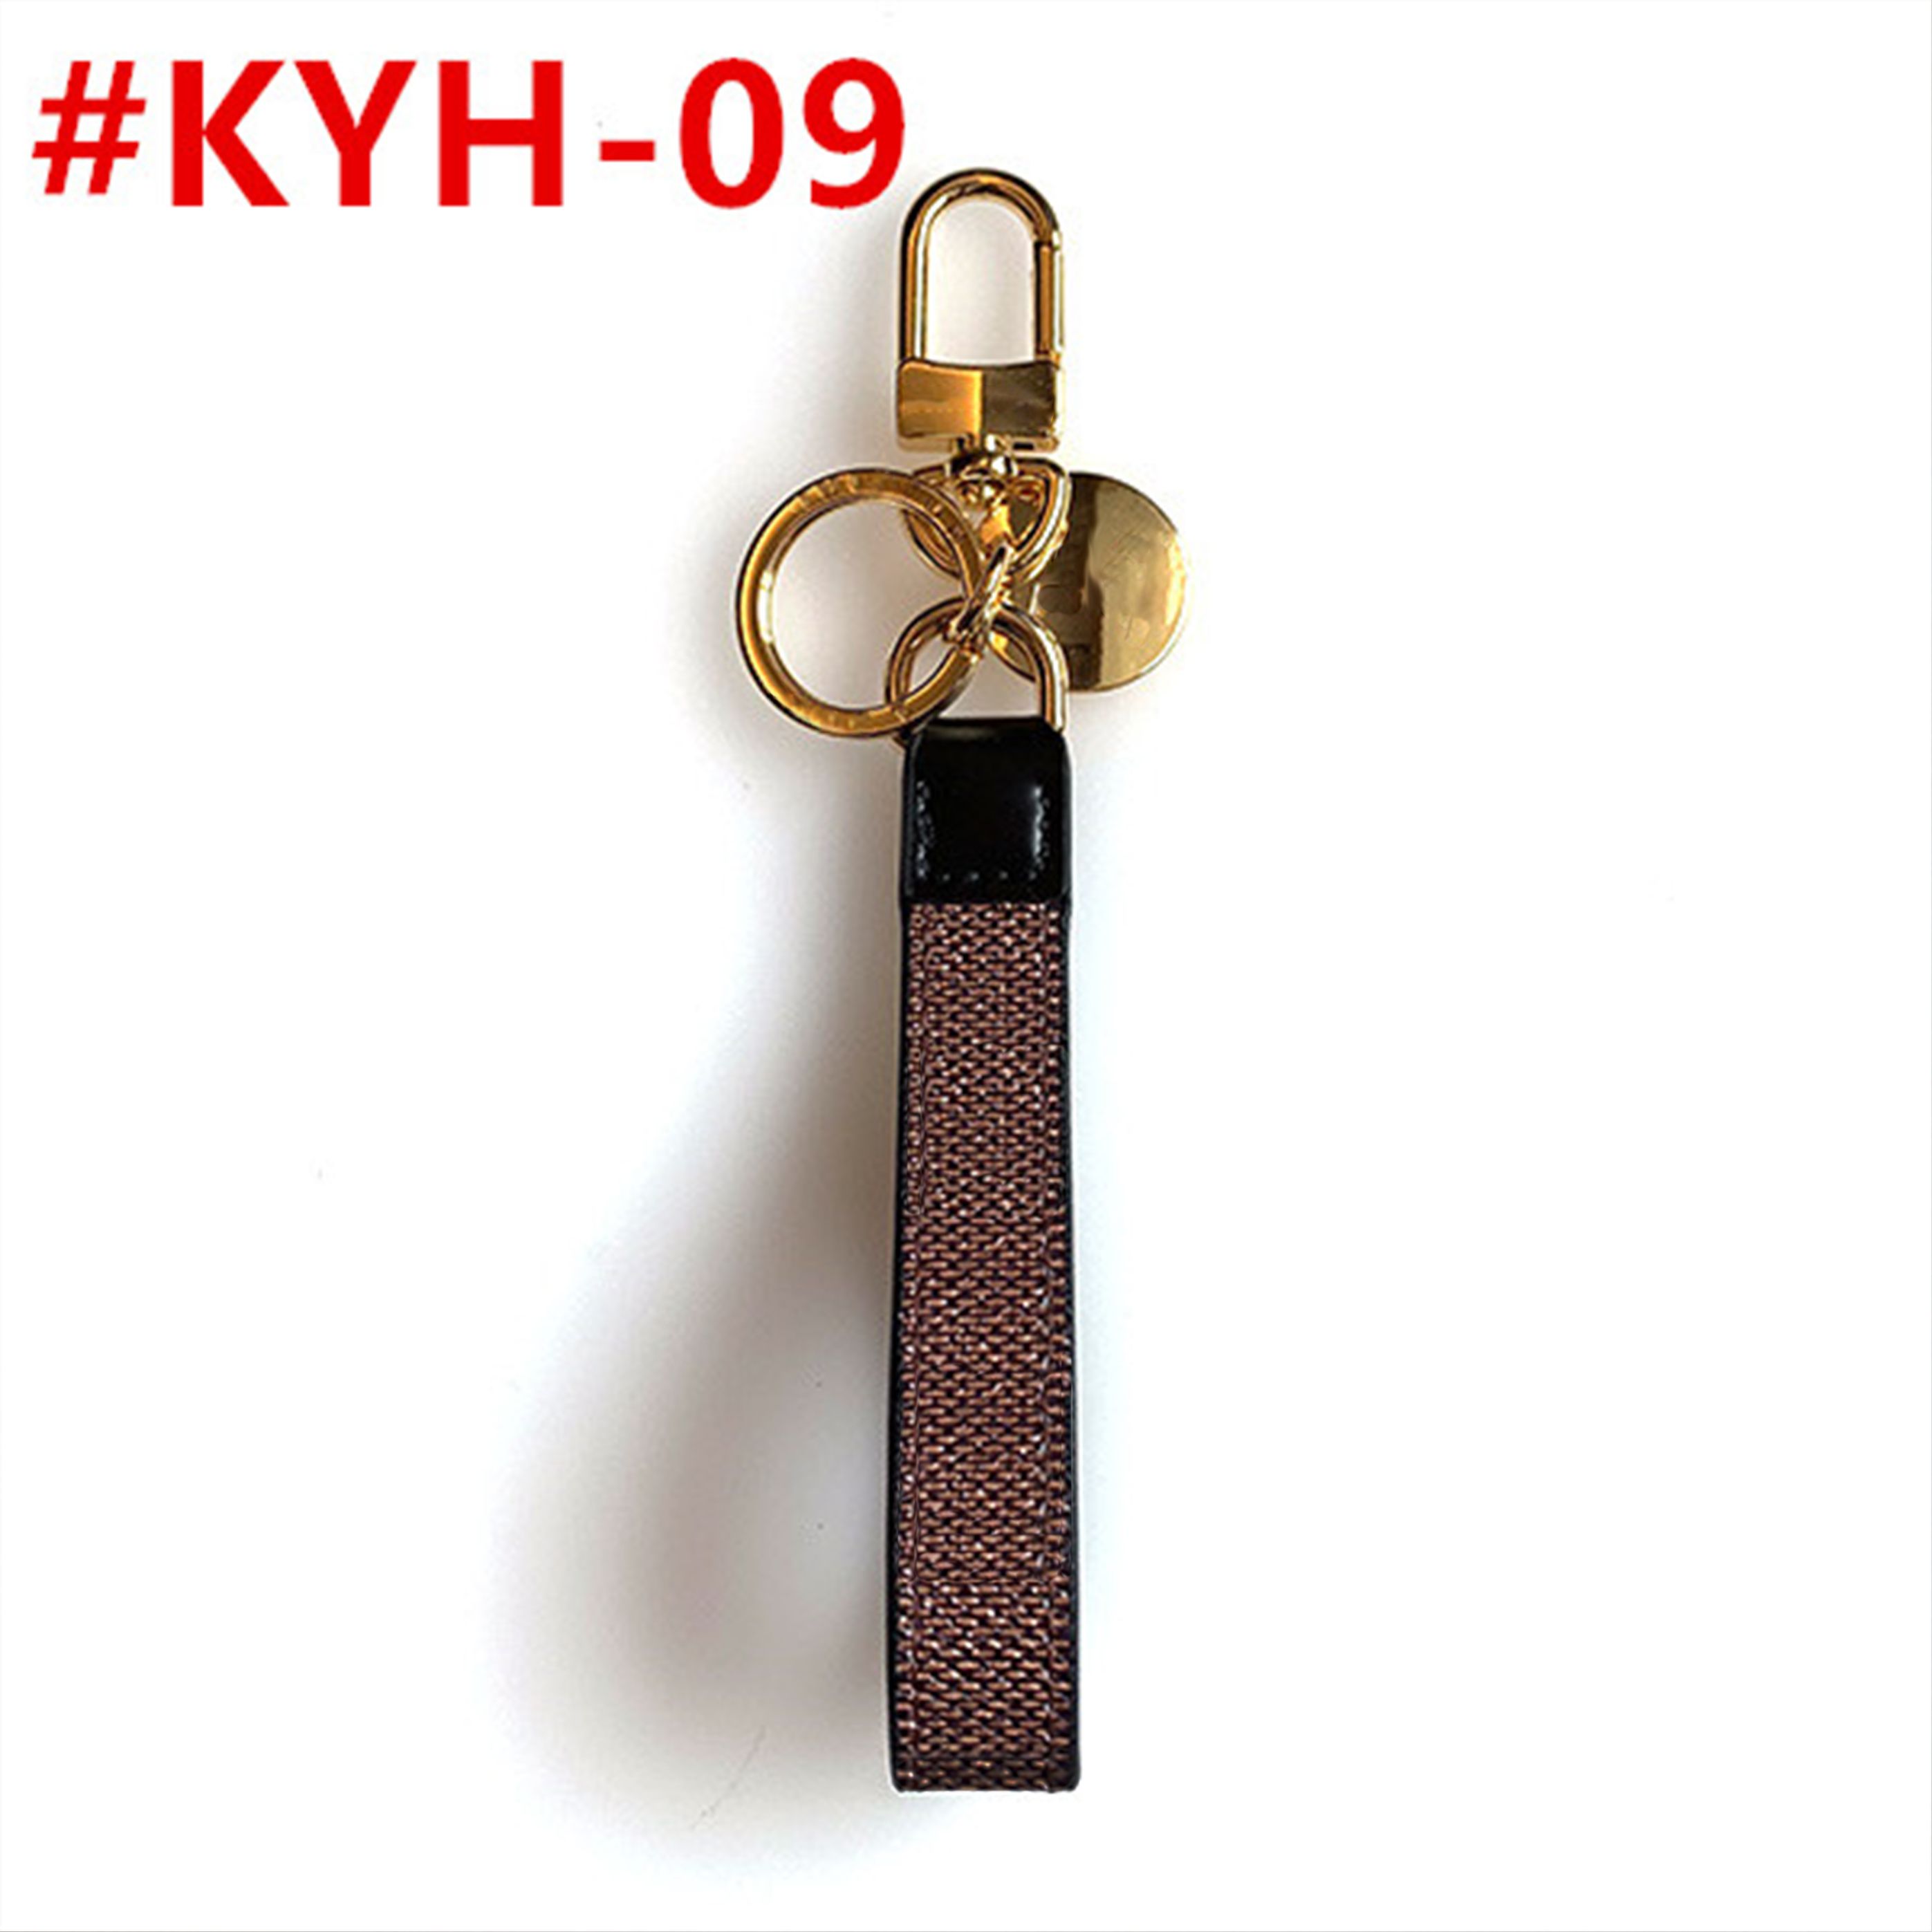 # Kyh-09